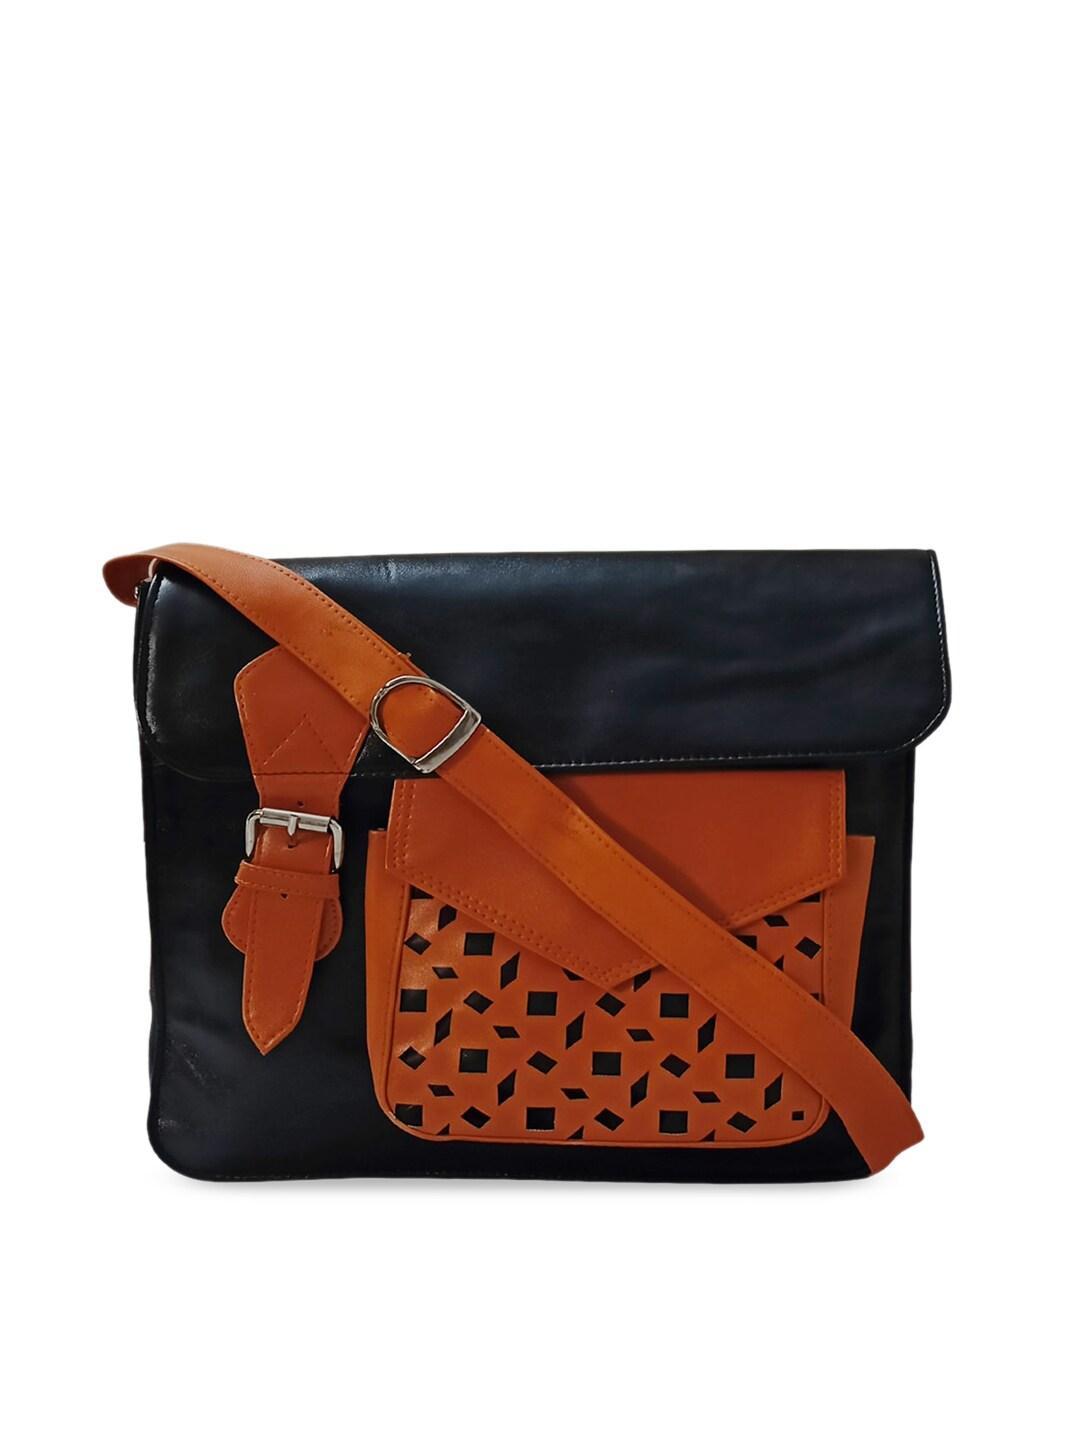 Spice Art Black Geometric Embellished PU Structured Sling Bag with Cut Work